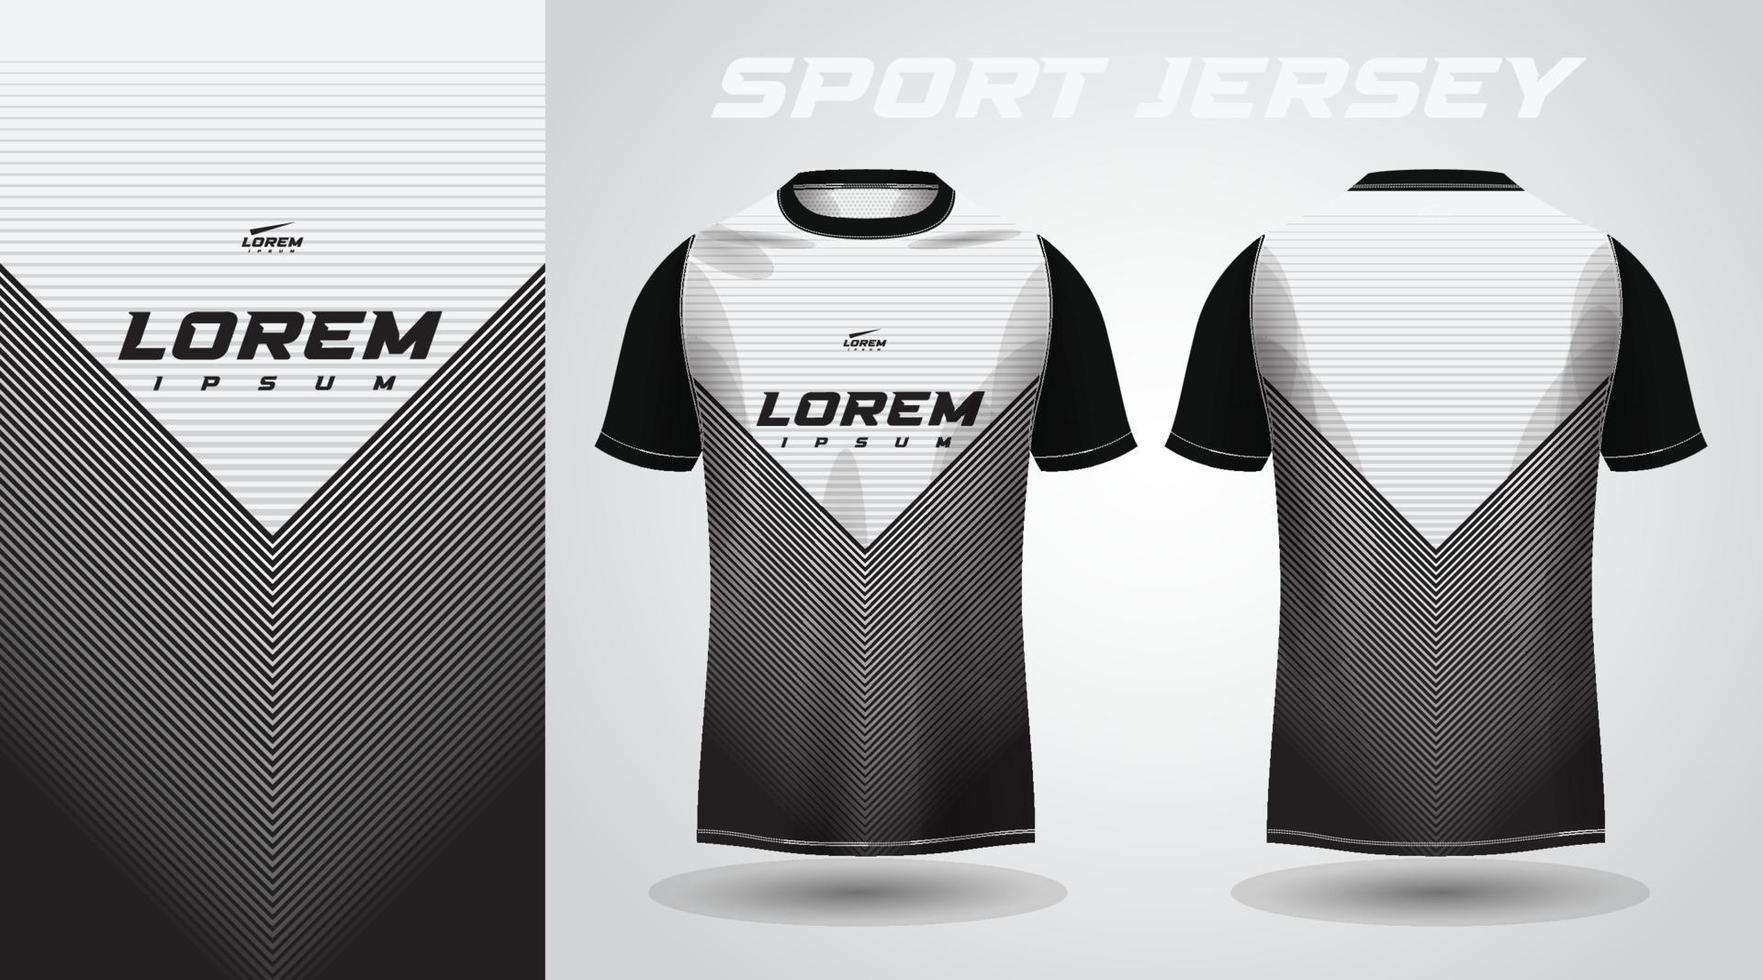 svart vit skjorta sport jersey design vektor